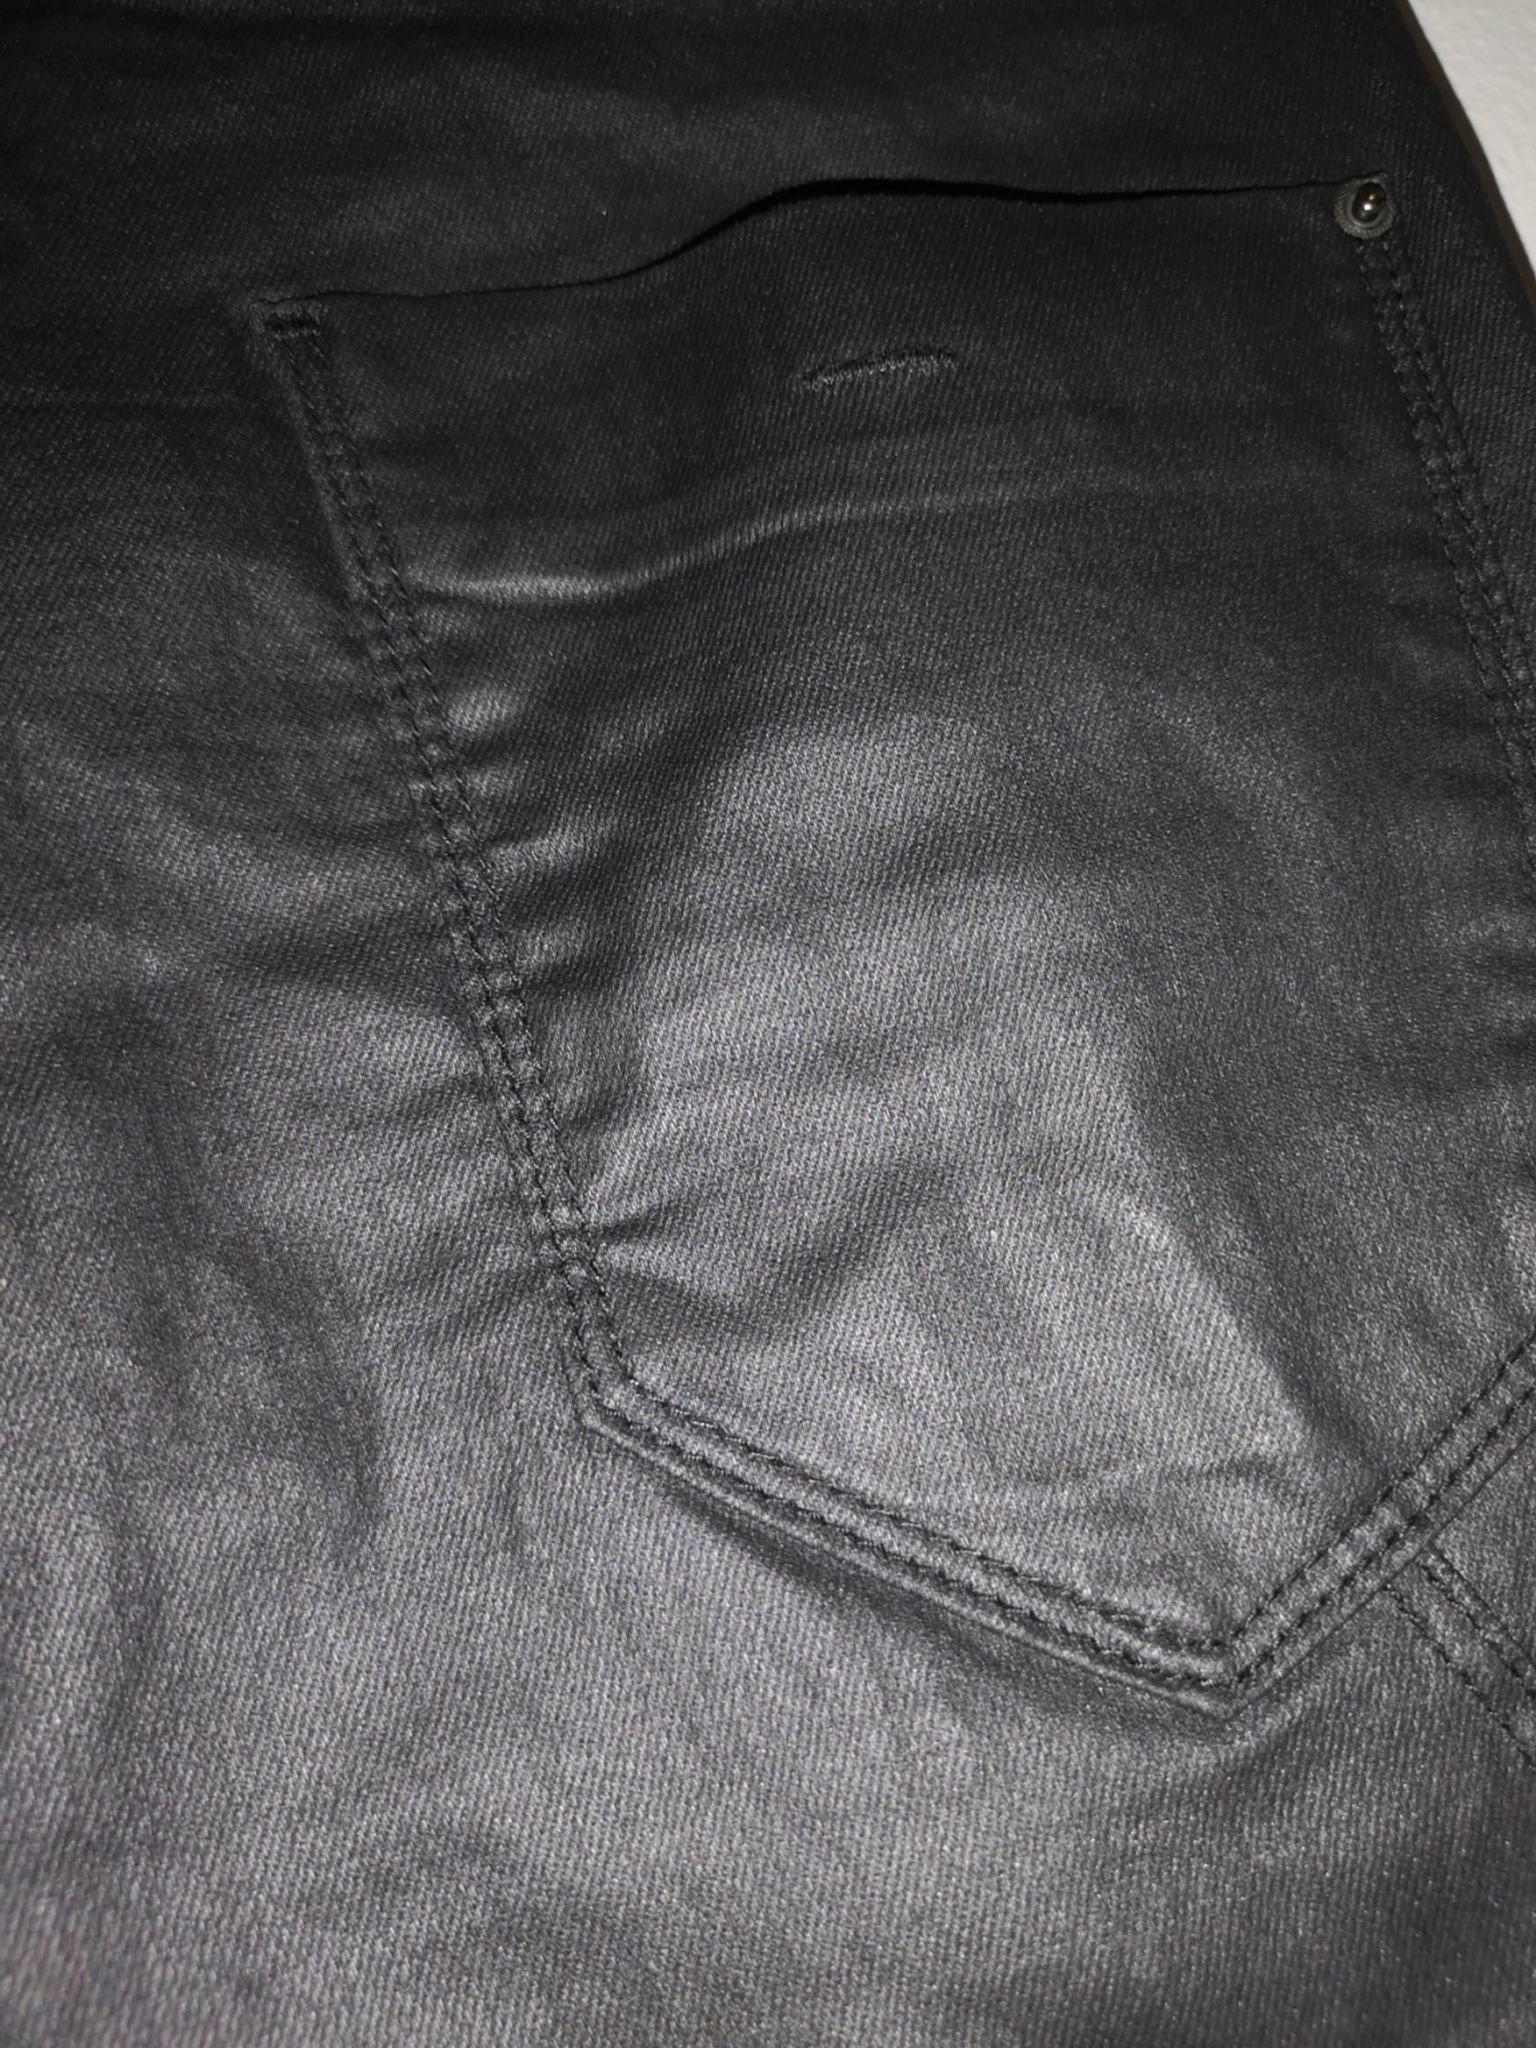 zara leather look jeans